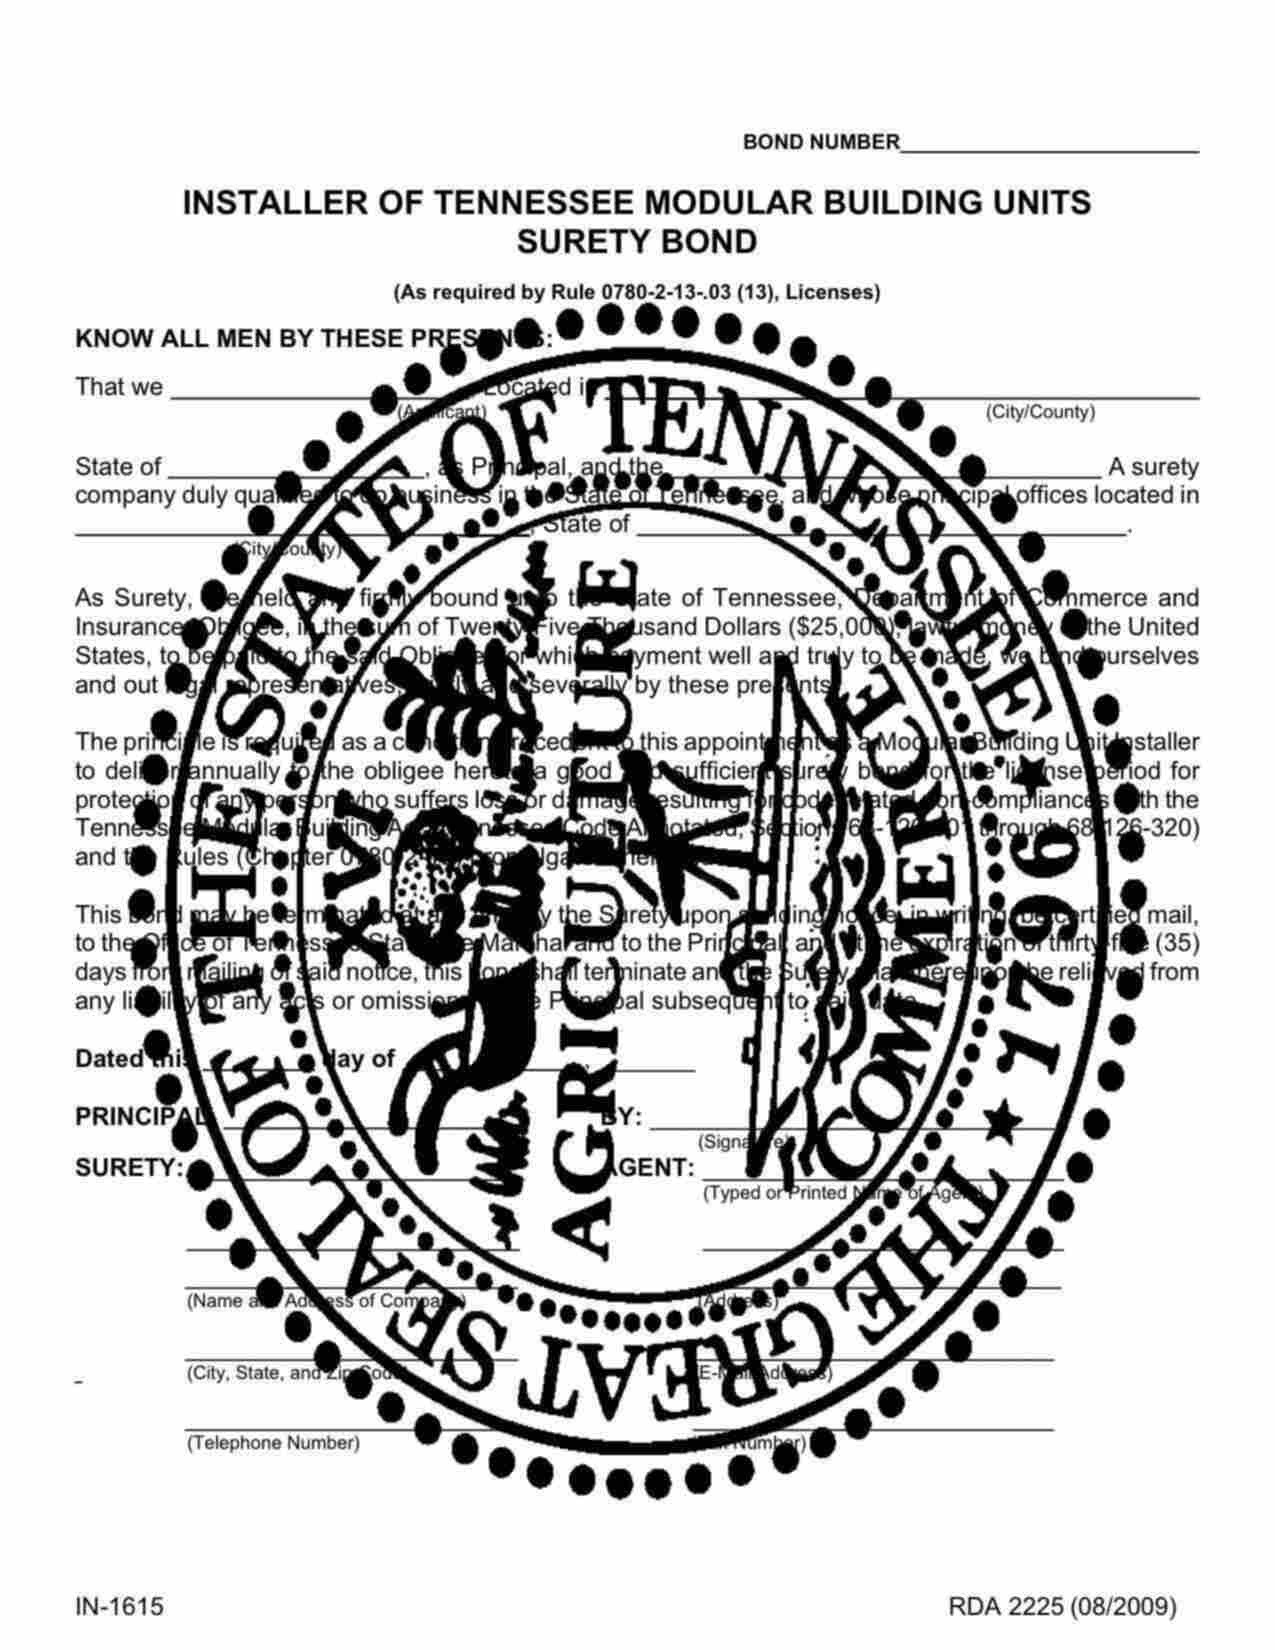 Tennessee Installer of Modular Building Units Bond Form